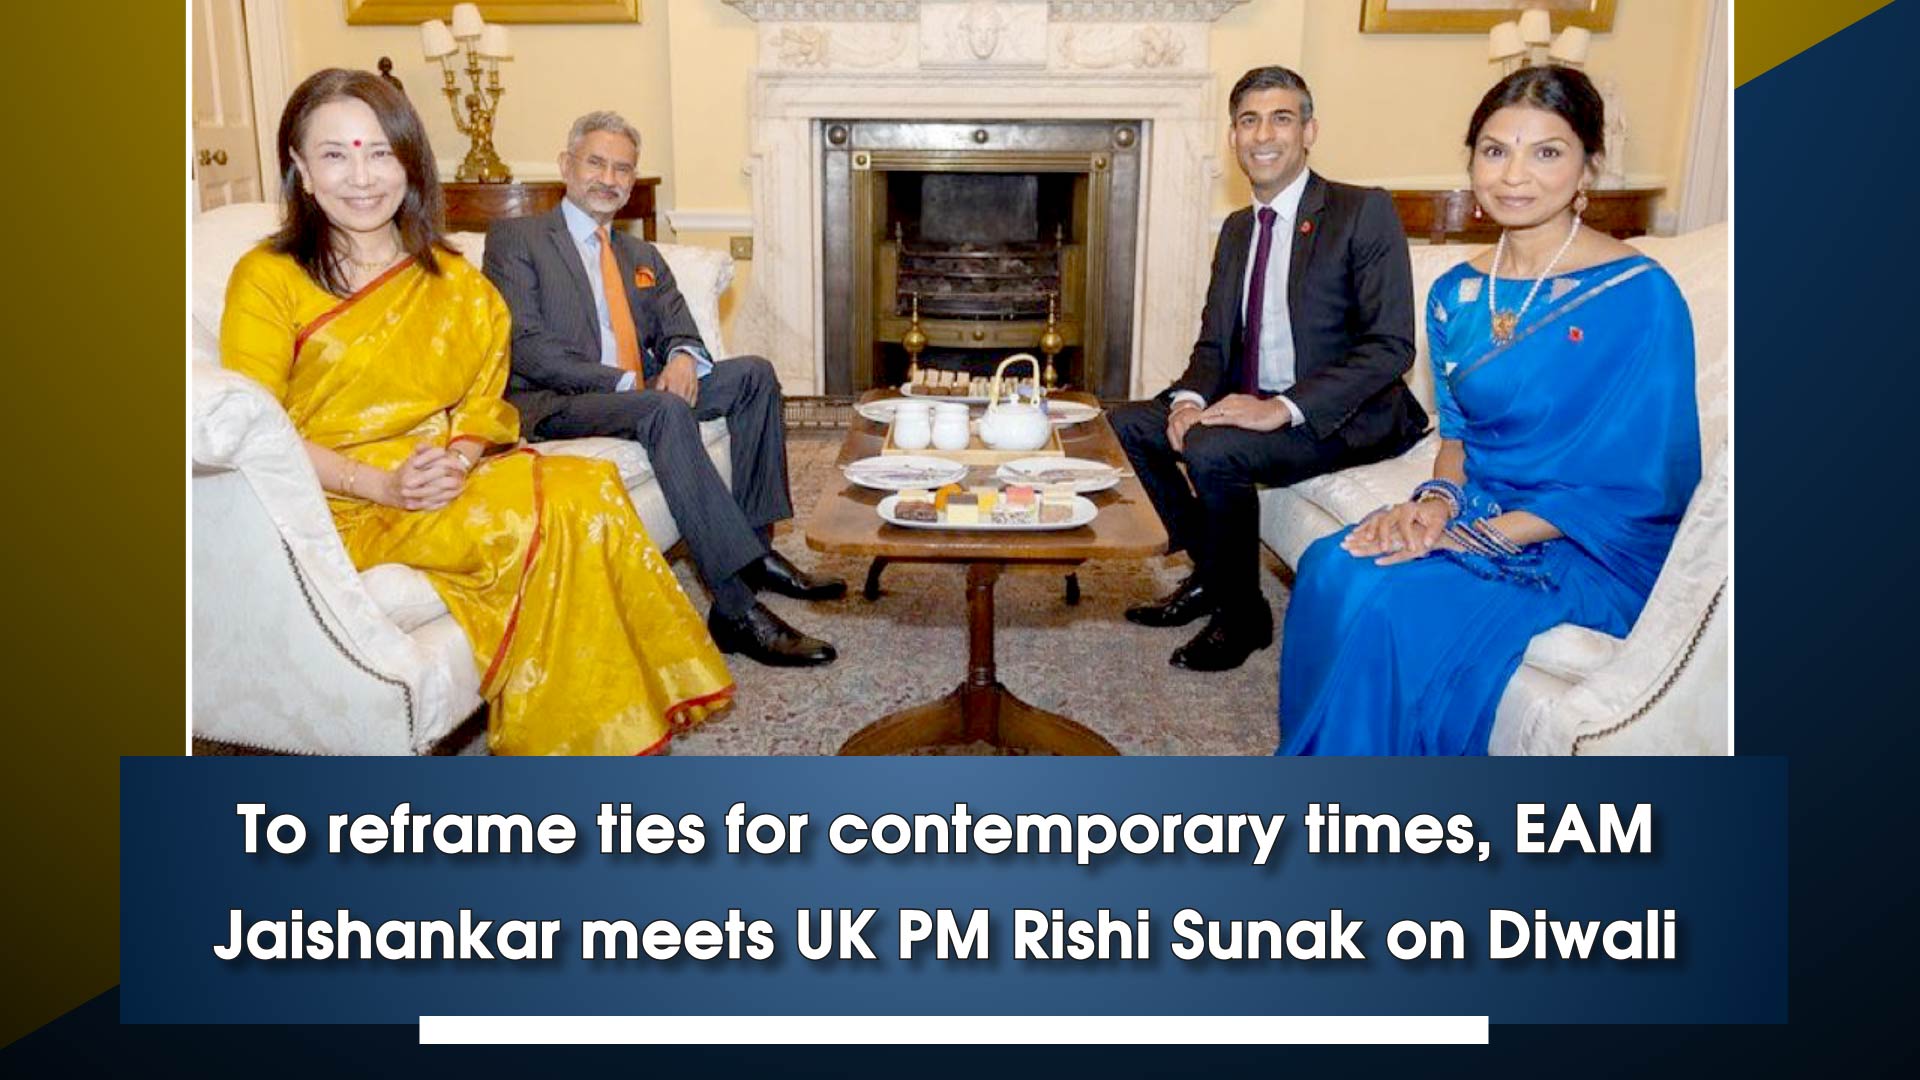 To reframe ties for contemporary times, EAM Jaishankar meets UK PM Rishi Sunak on Diwali